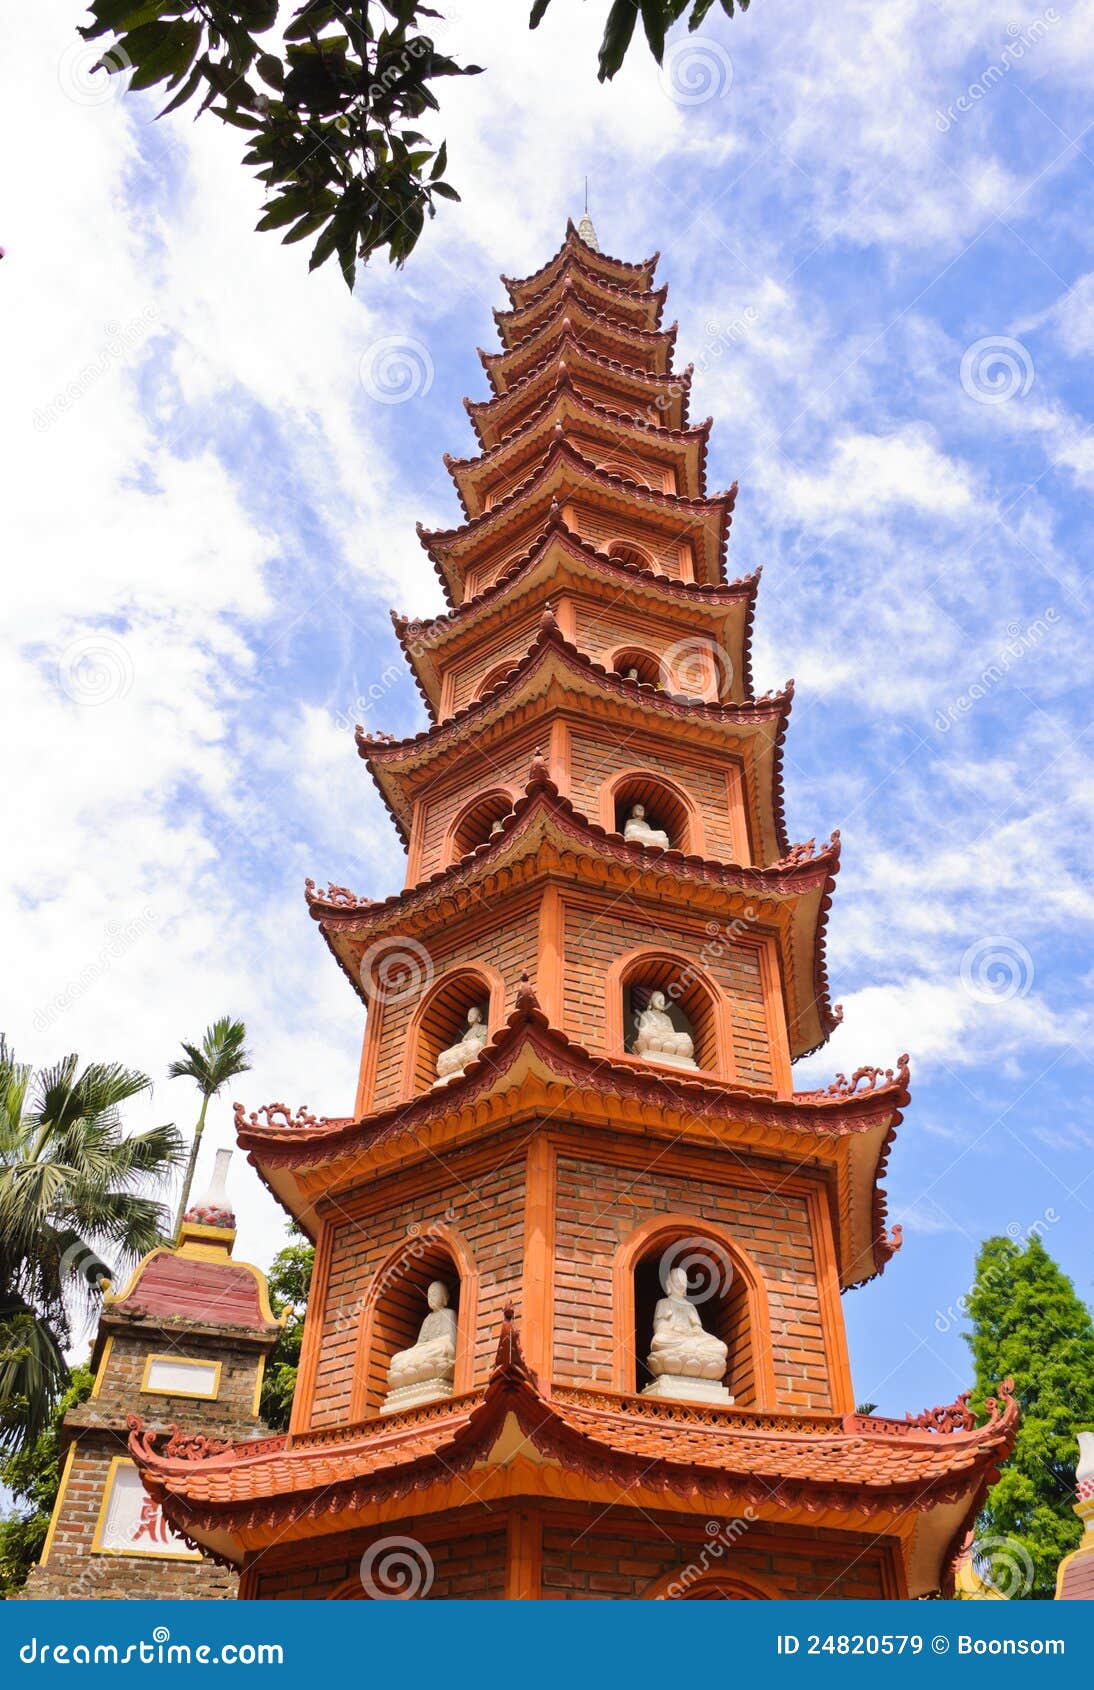 tran quoc pagoda